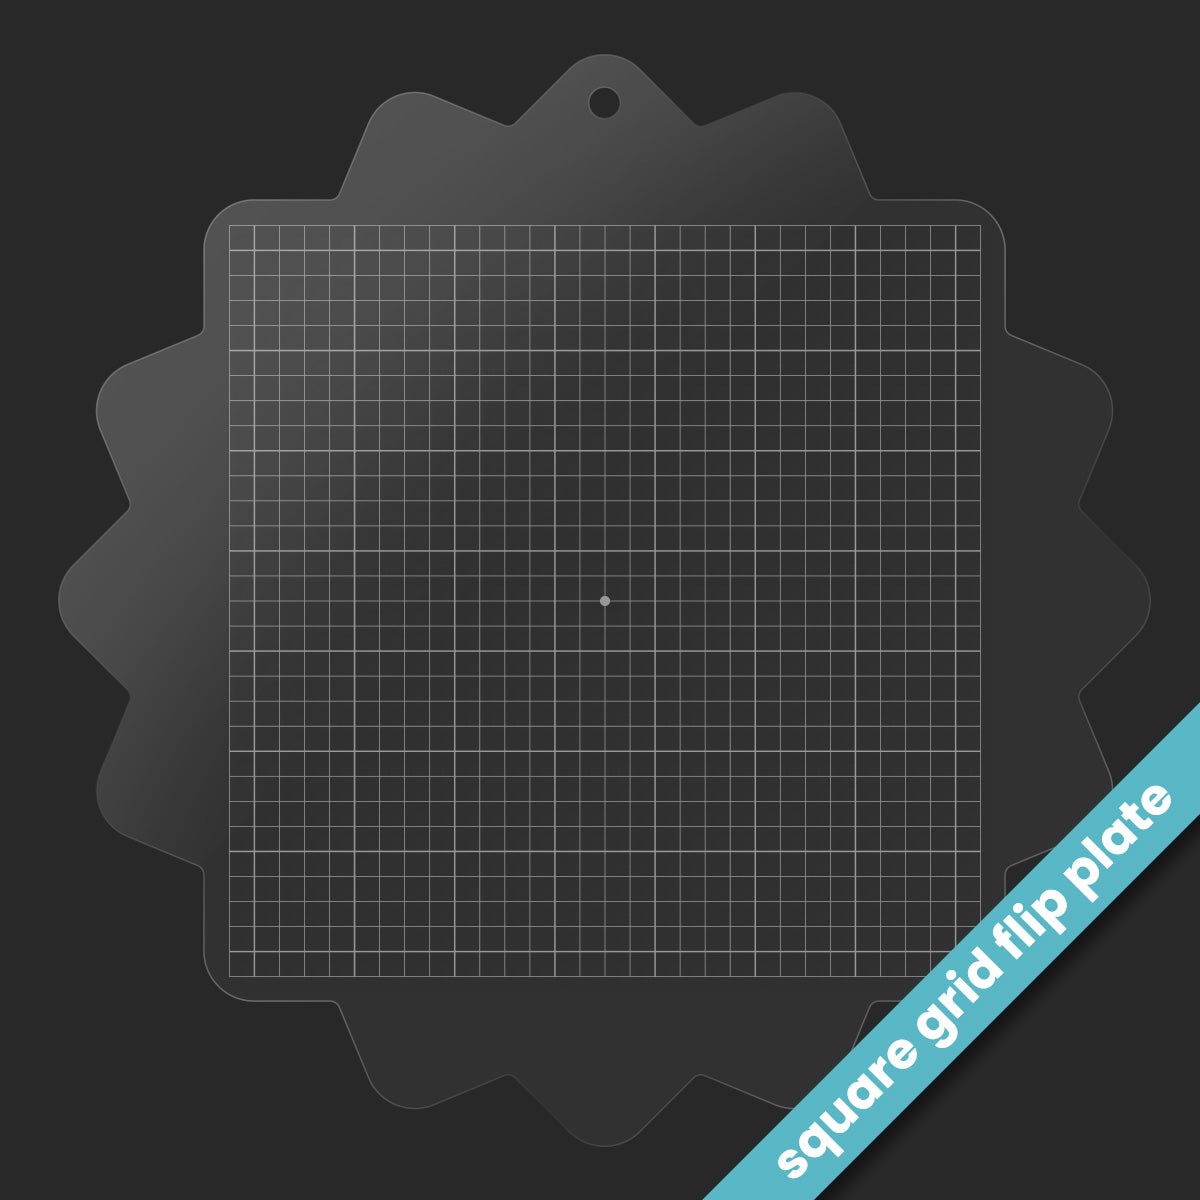 Altenew Stampwheel - Square Grid Flip Plate